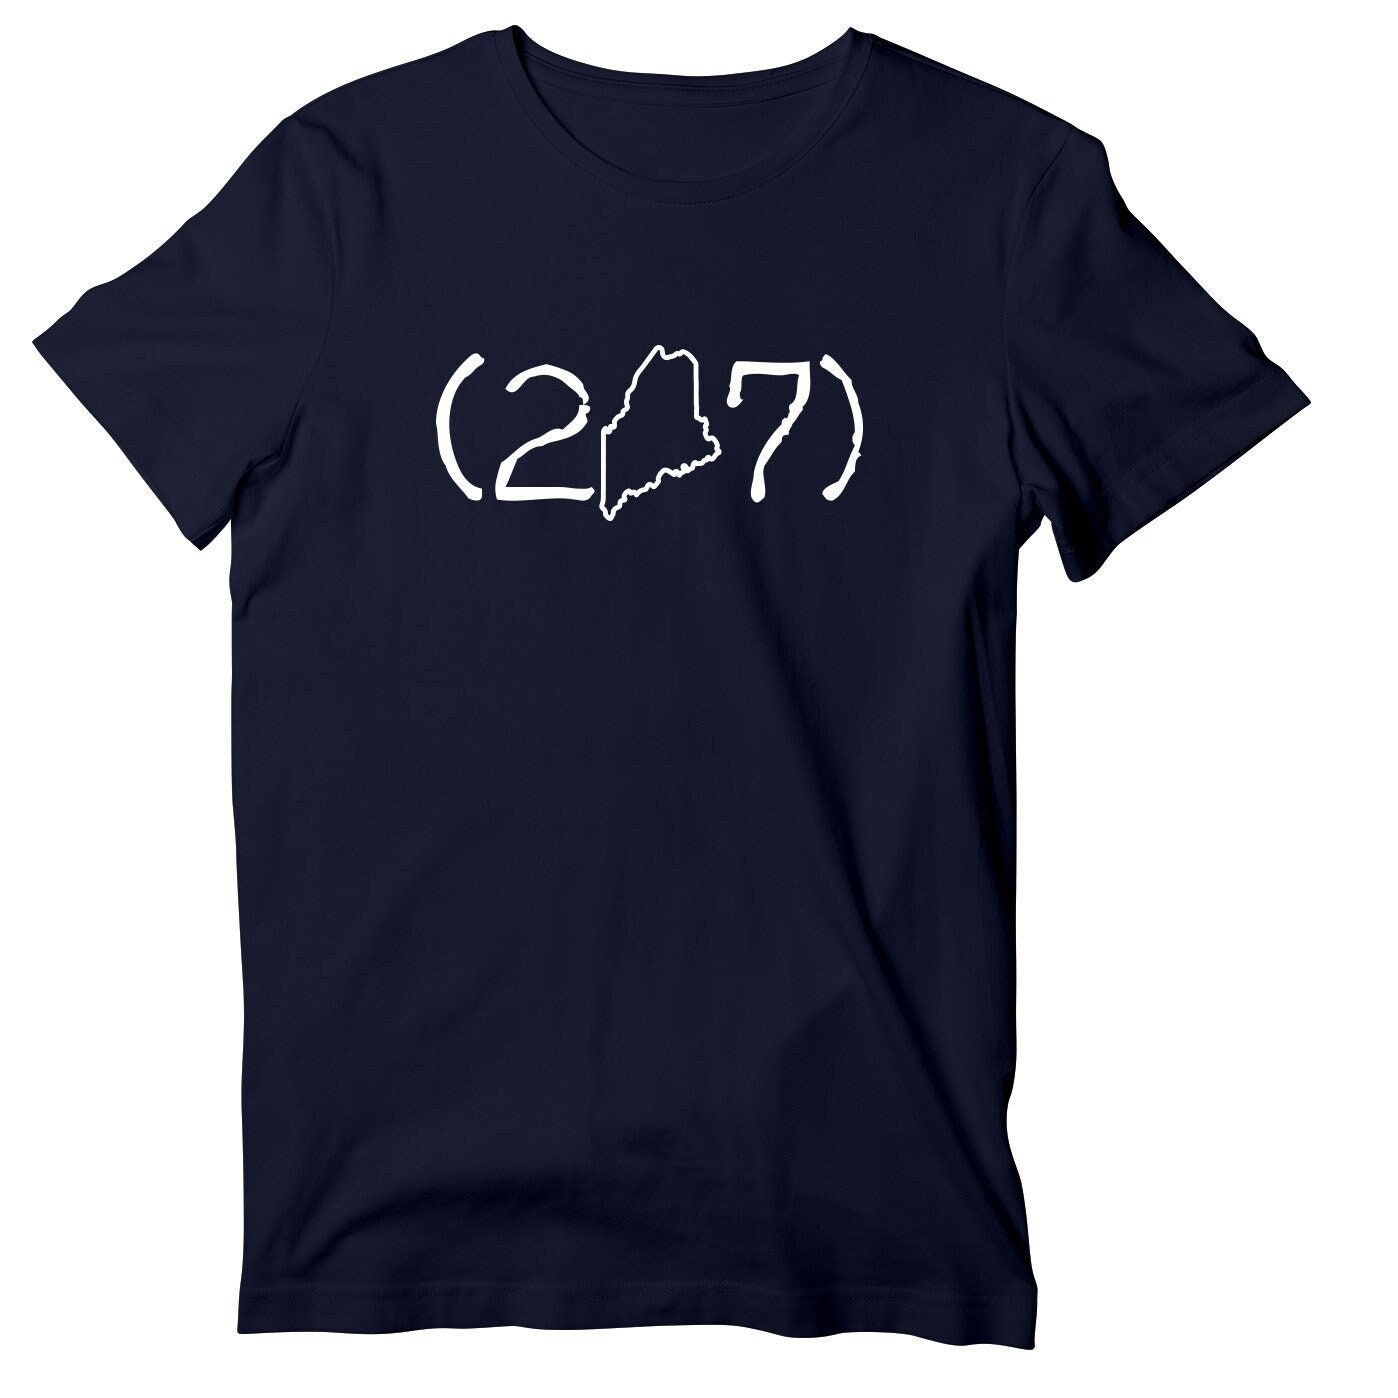 207 Area Code T-shirt, State of Maine Short Sleeve Shirt 